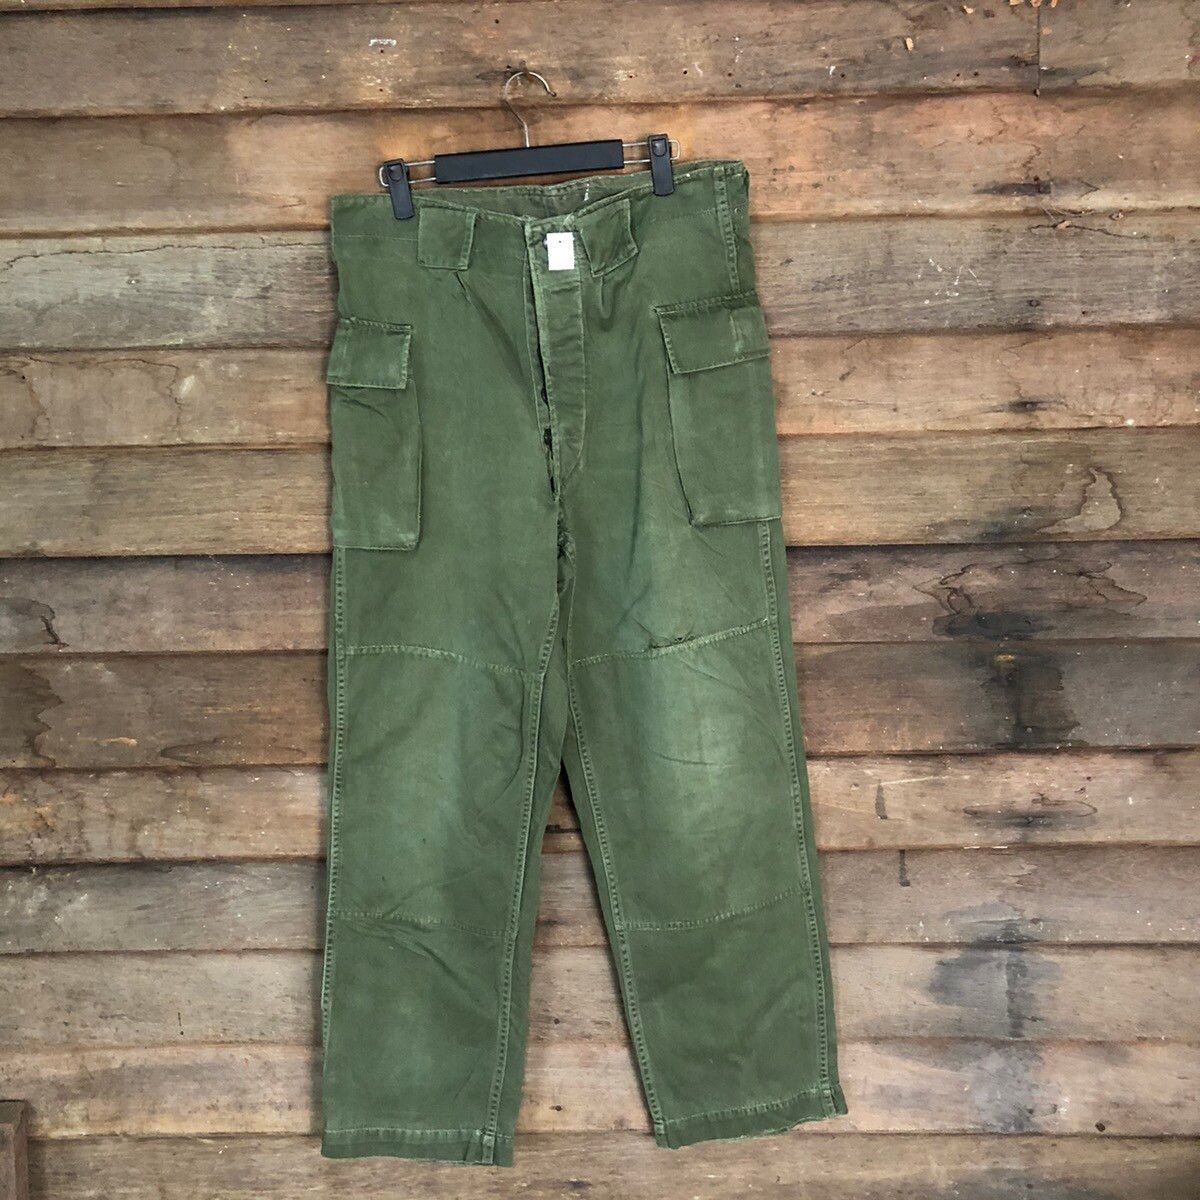 Vintage Japan vintage military tactical army Green Pants #7365 